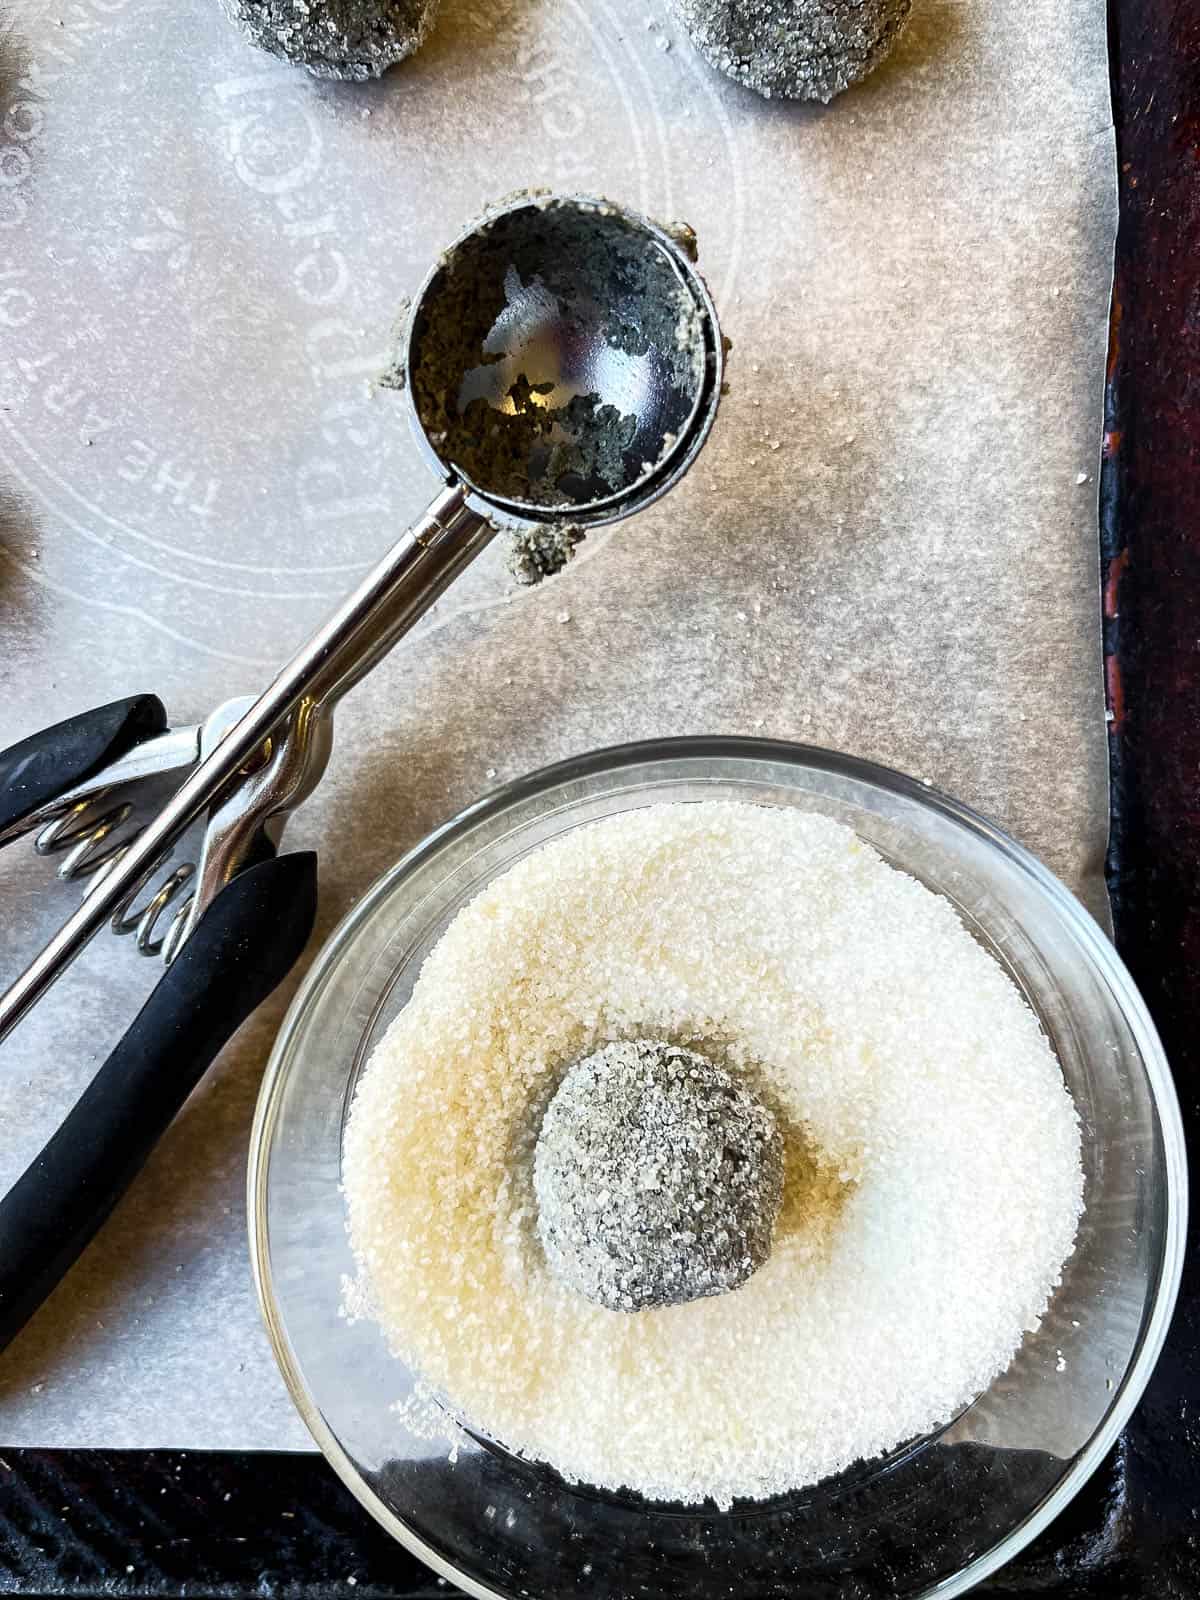 rolling a dough ball in sugar.